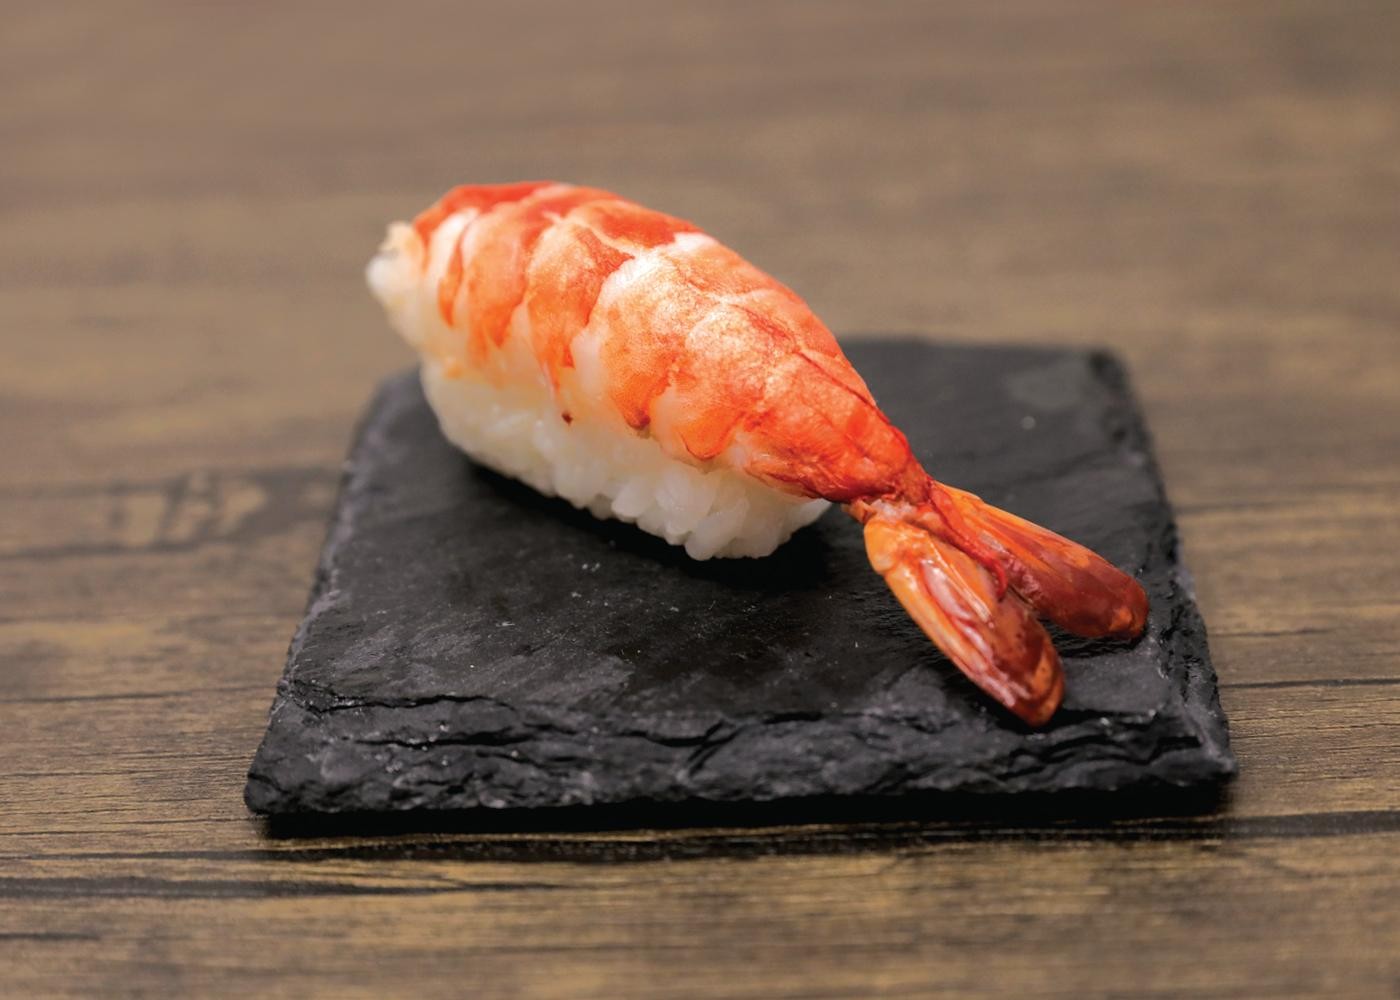 Shrimp (Ebi) Sushi